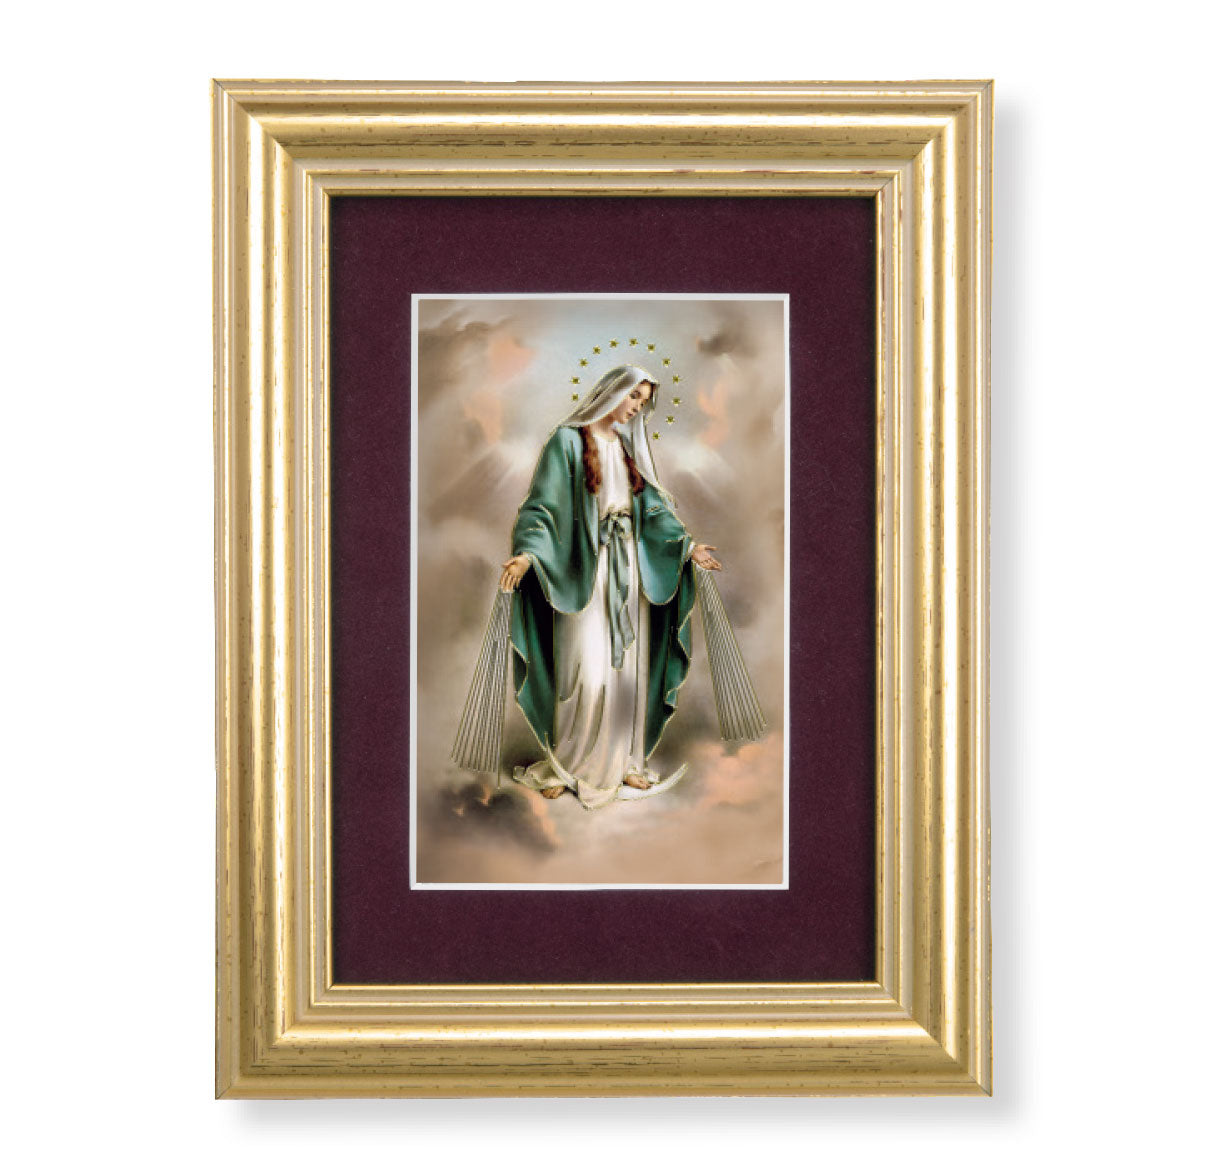 Our Lady of Grace Framed Art with Maroon Velvet Matting